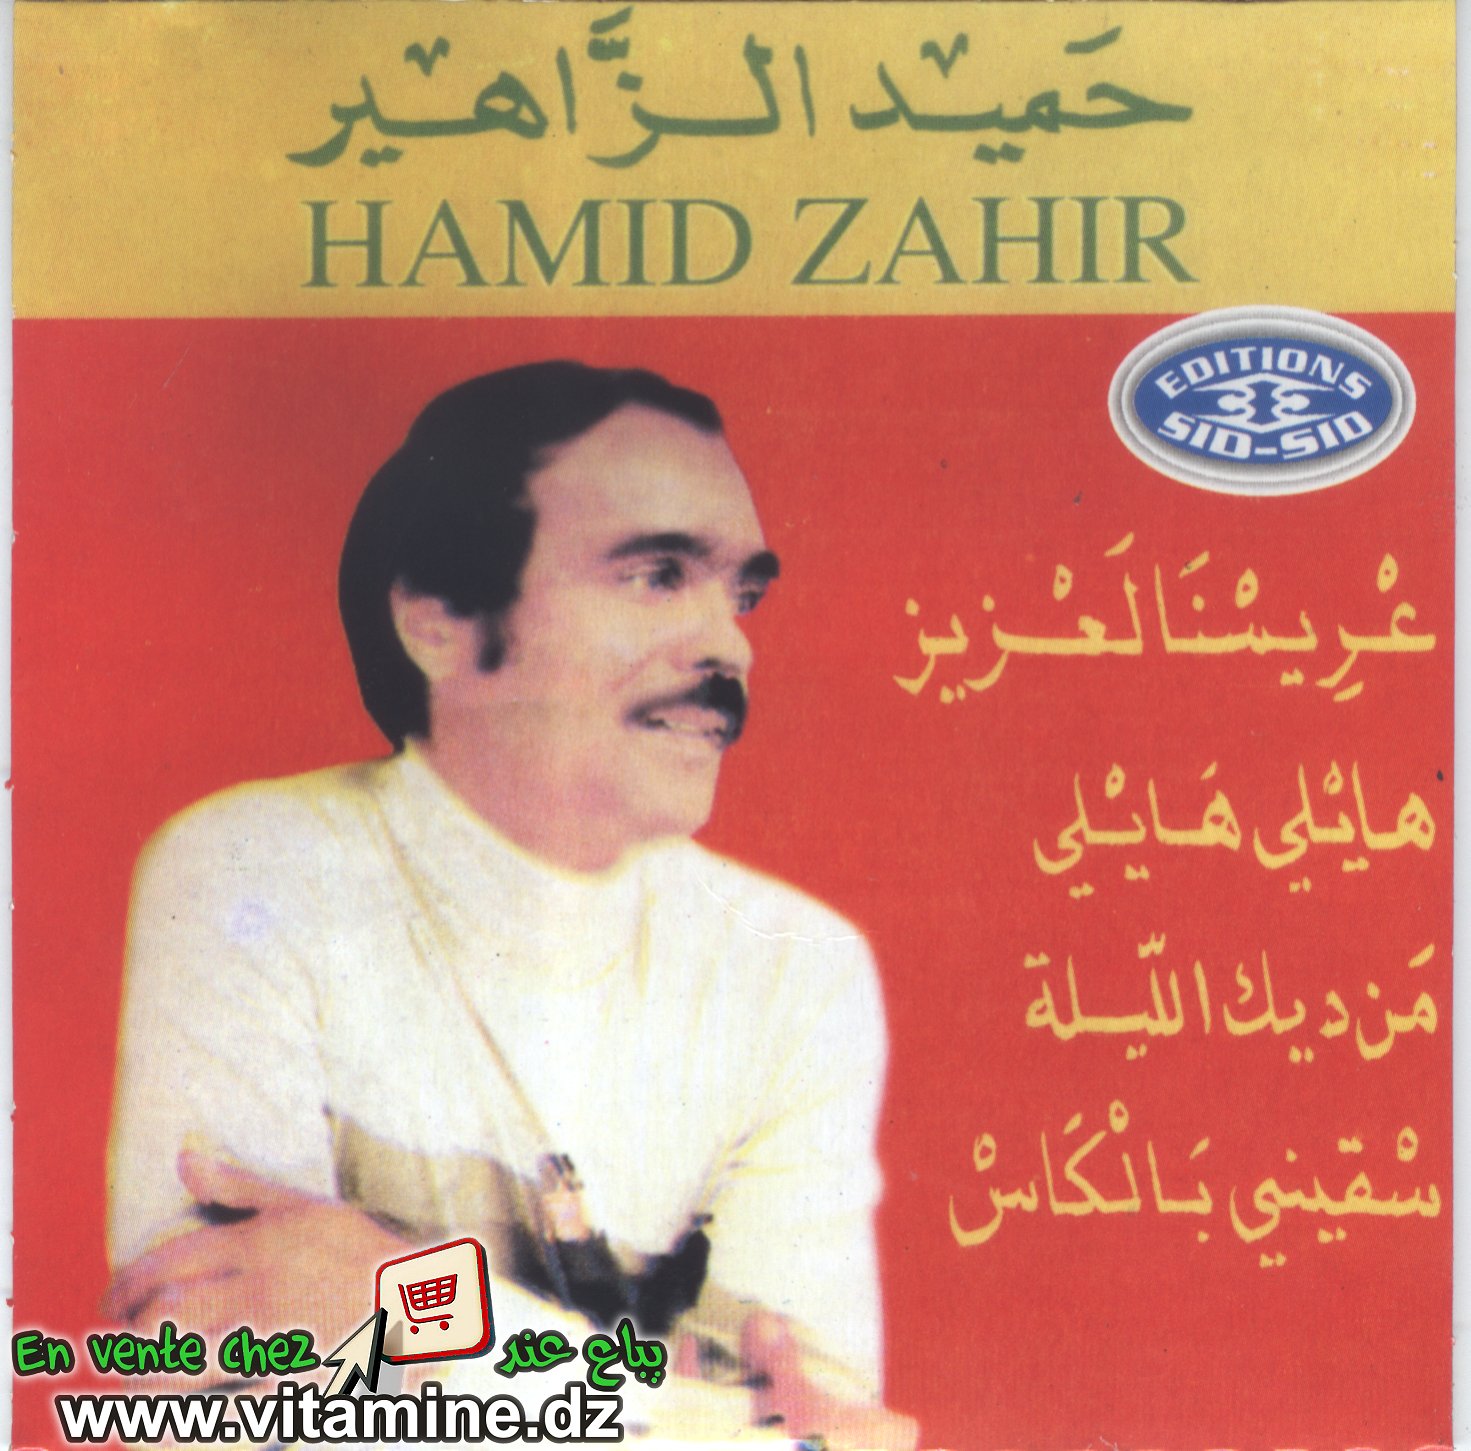 Hamid Zahir - compilation 1